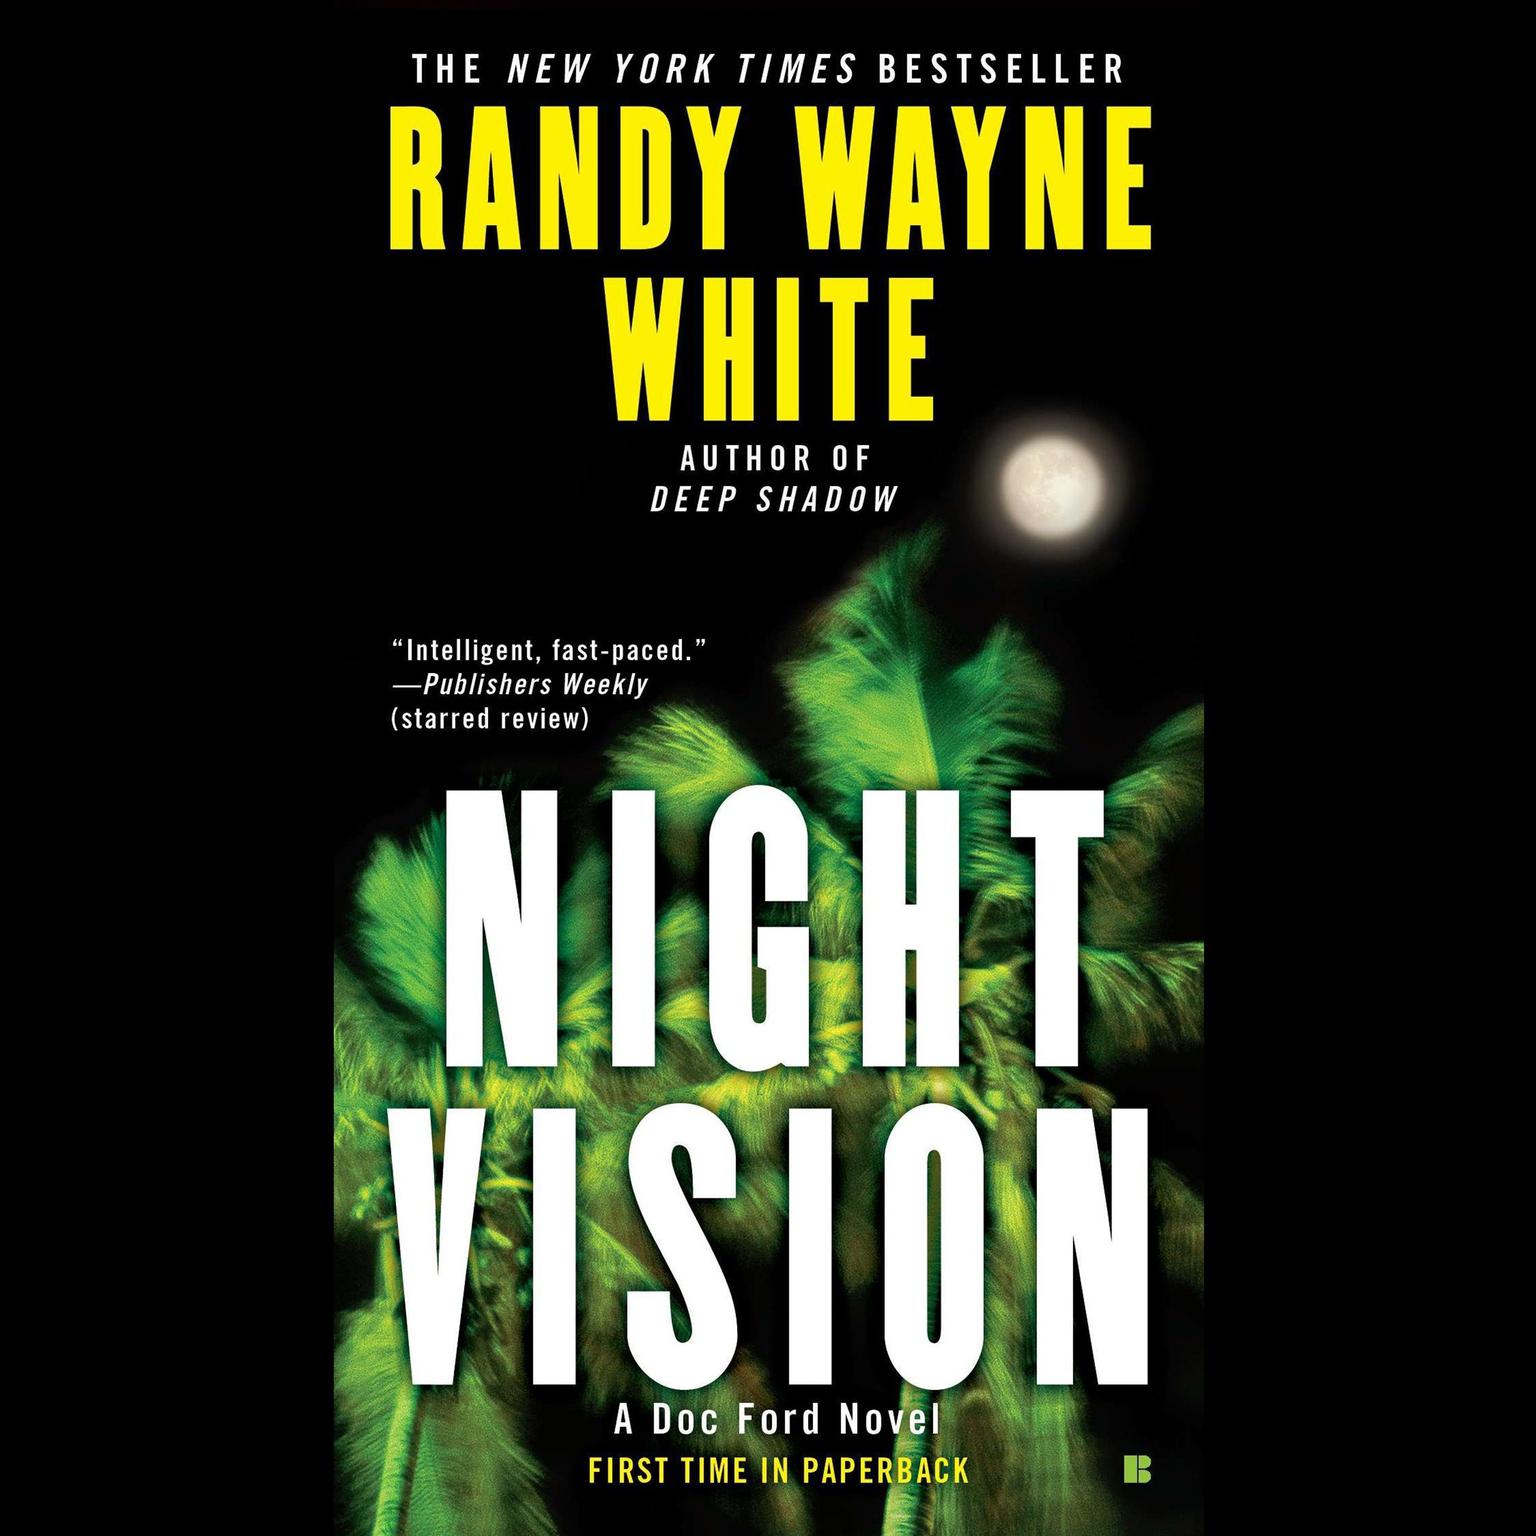 Night Vision Audiobook, by Randy Wayne White